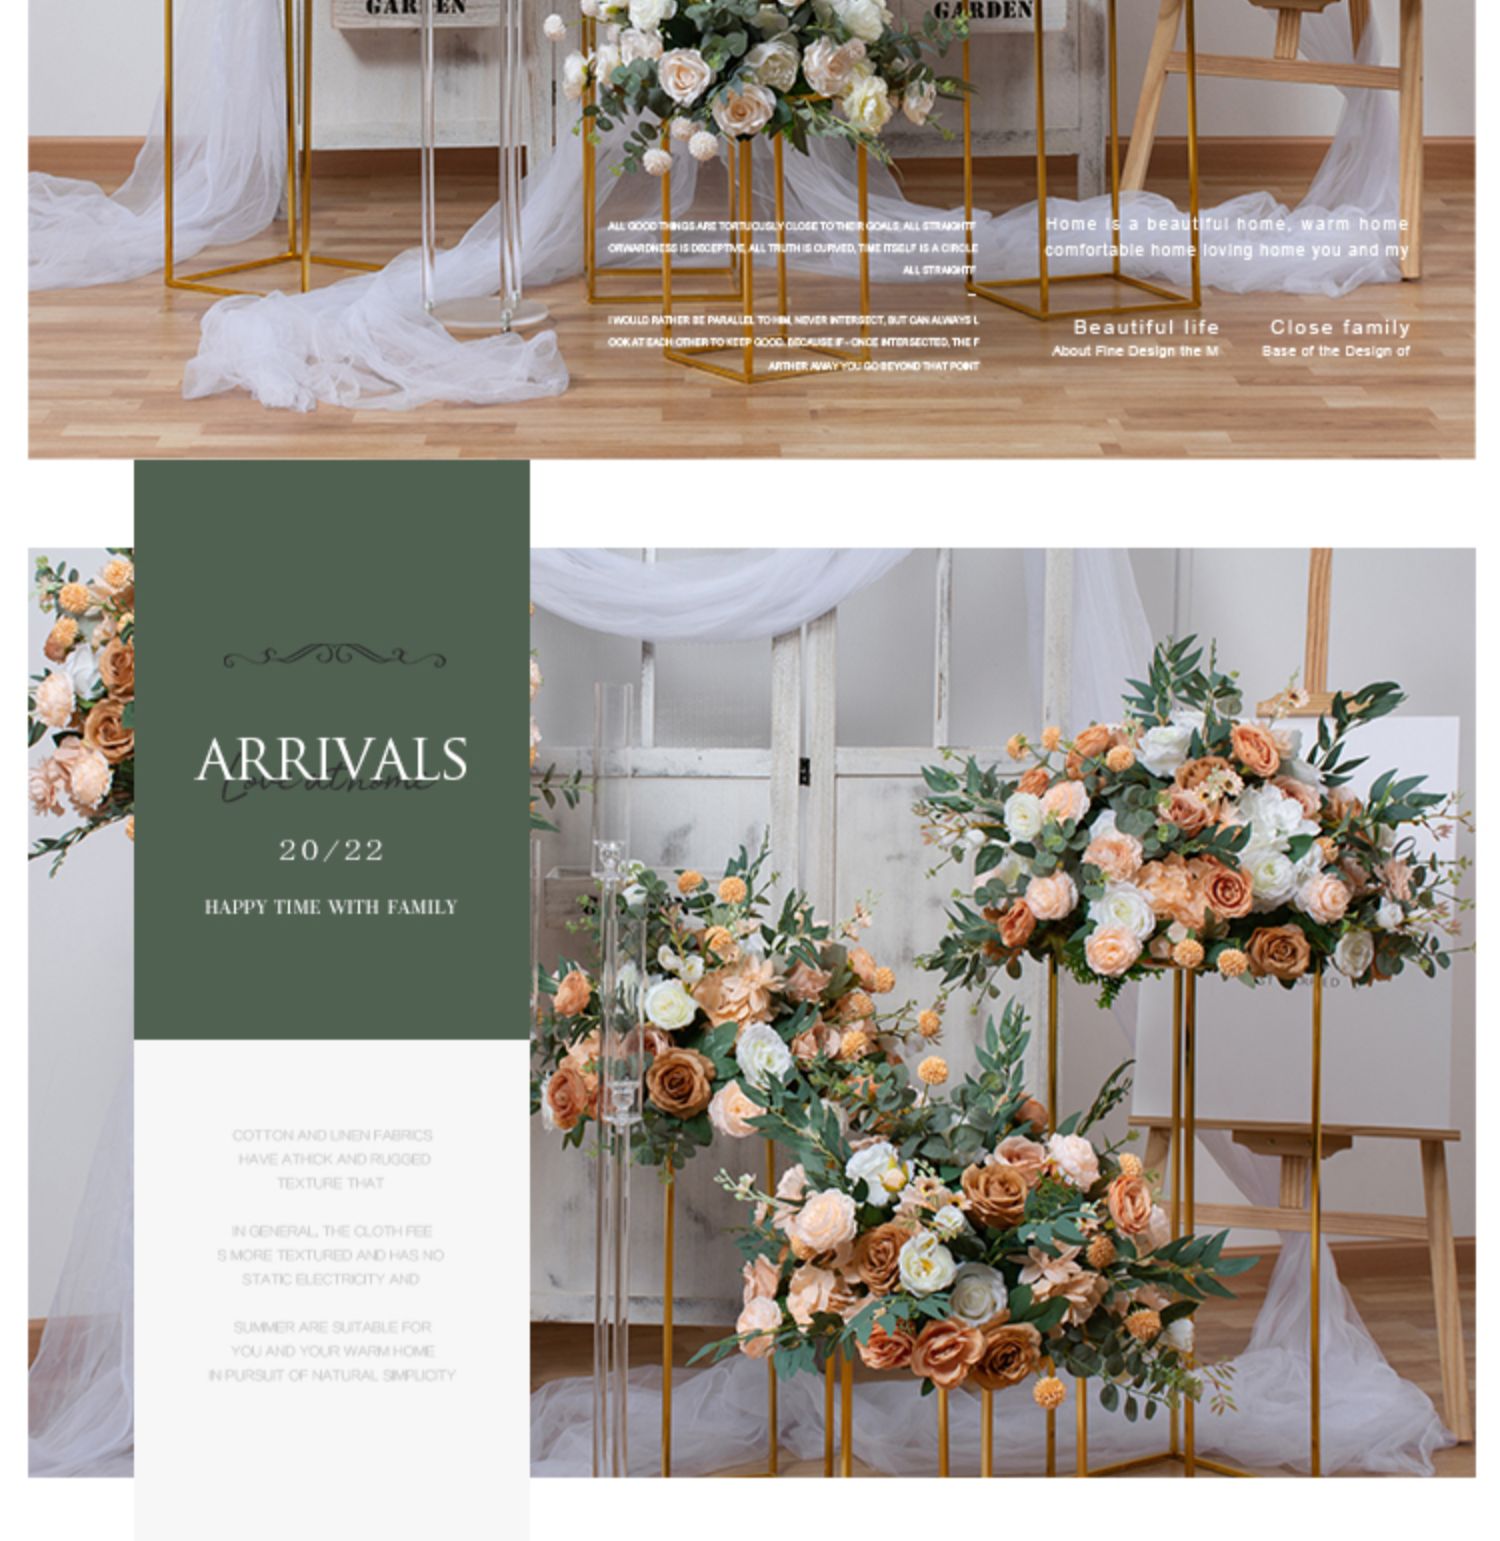 Floral Decor: Pricing and Popular Arrangements for Wedding Ceremonies